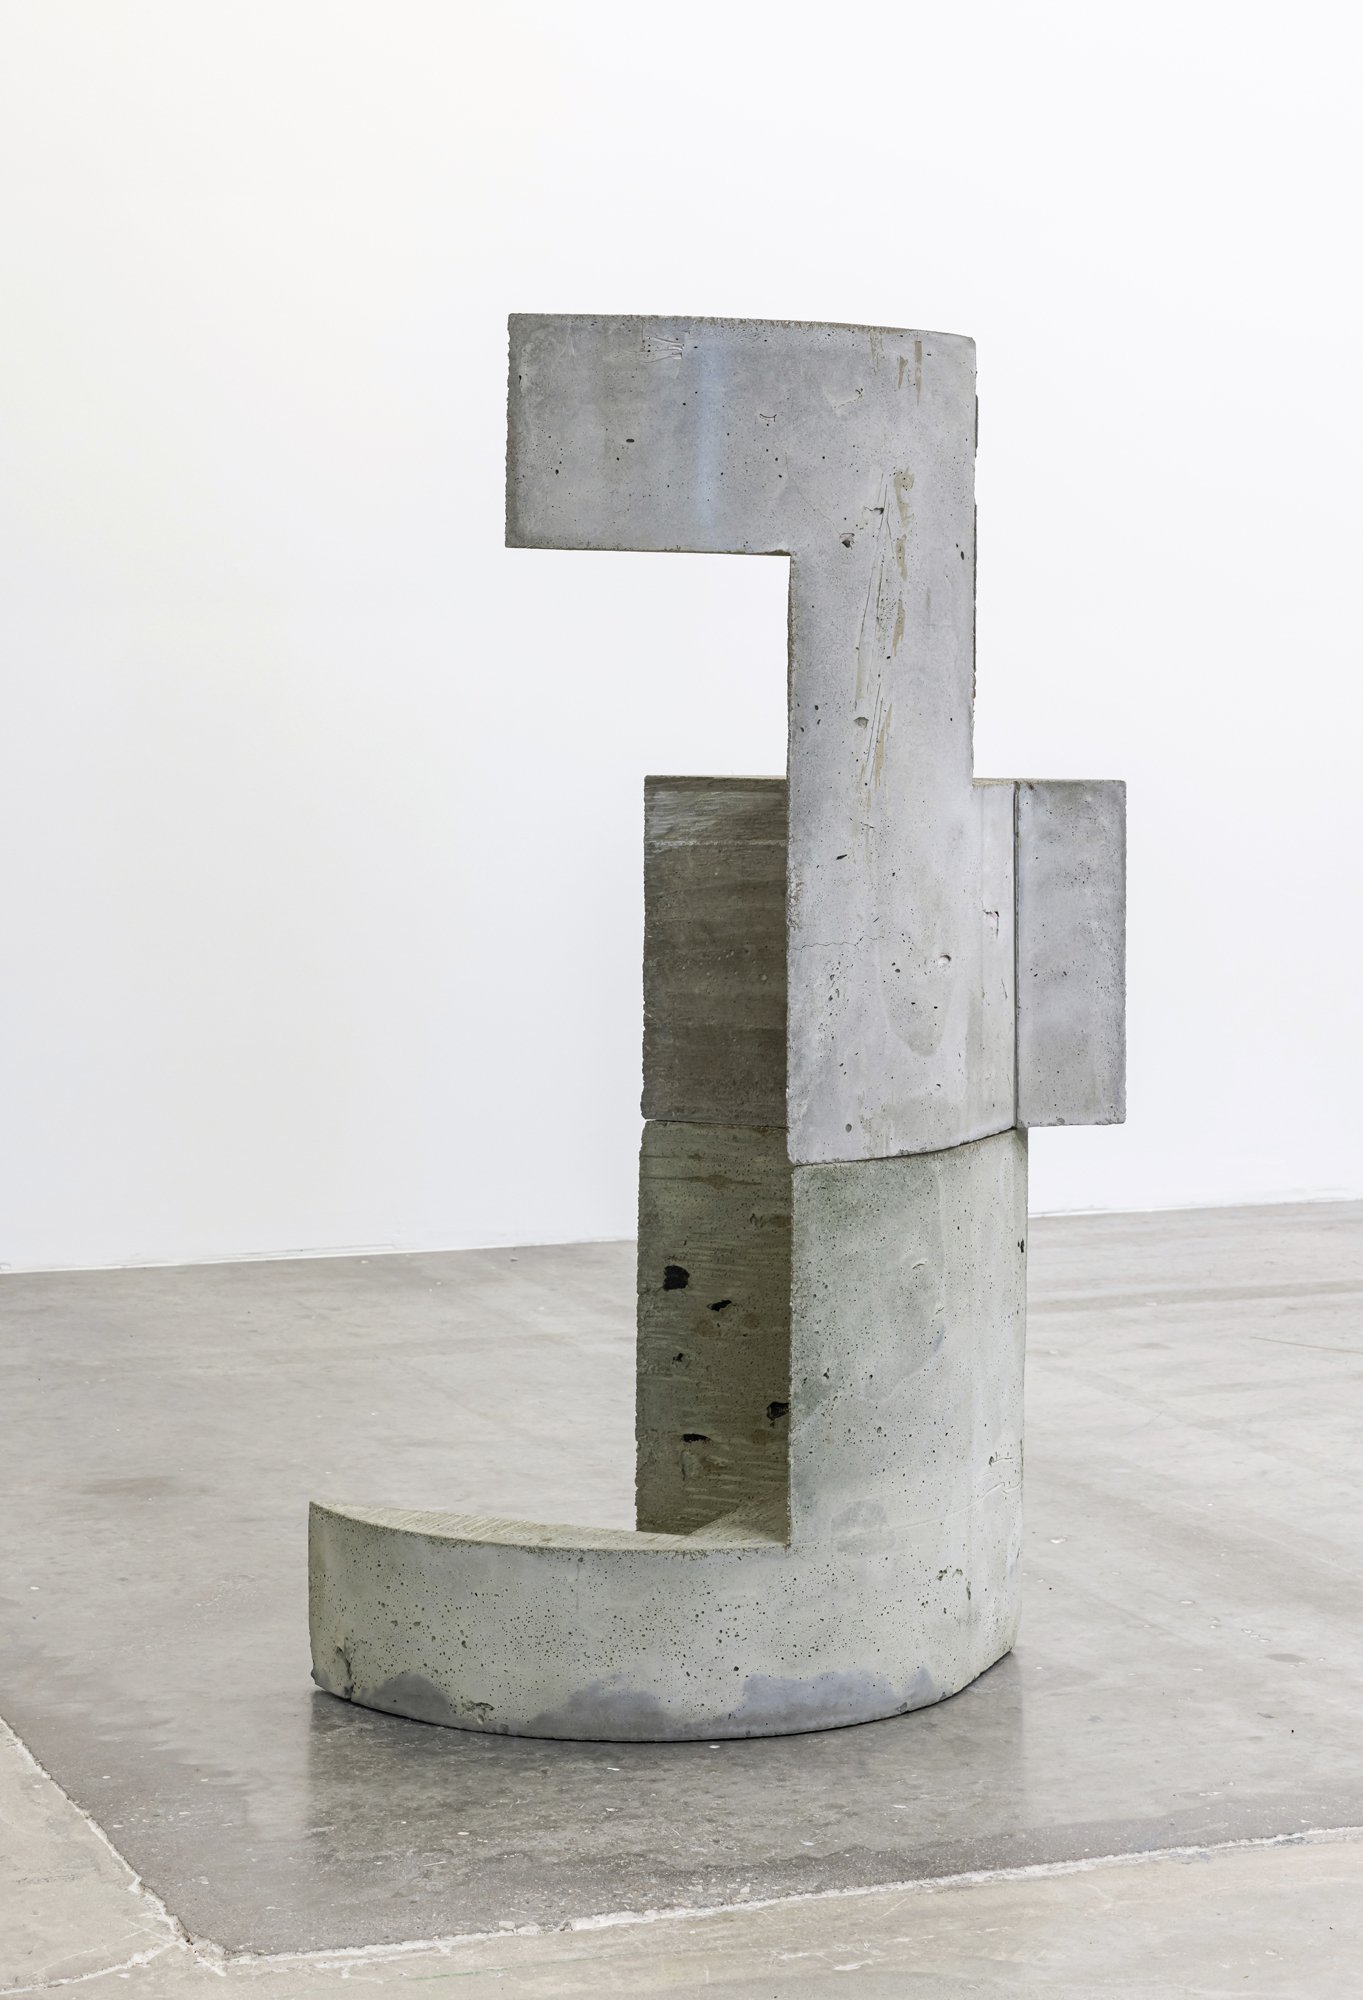   Yna , 2016, concrete and foam, 45 x 28 x 12 in 